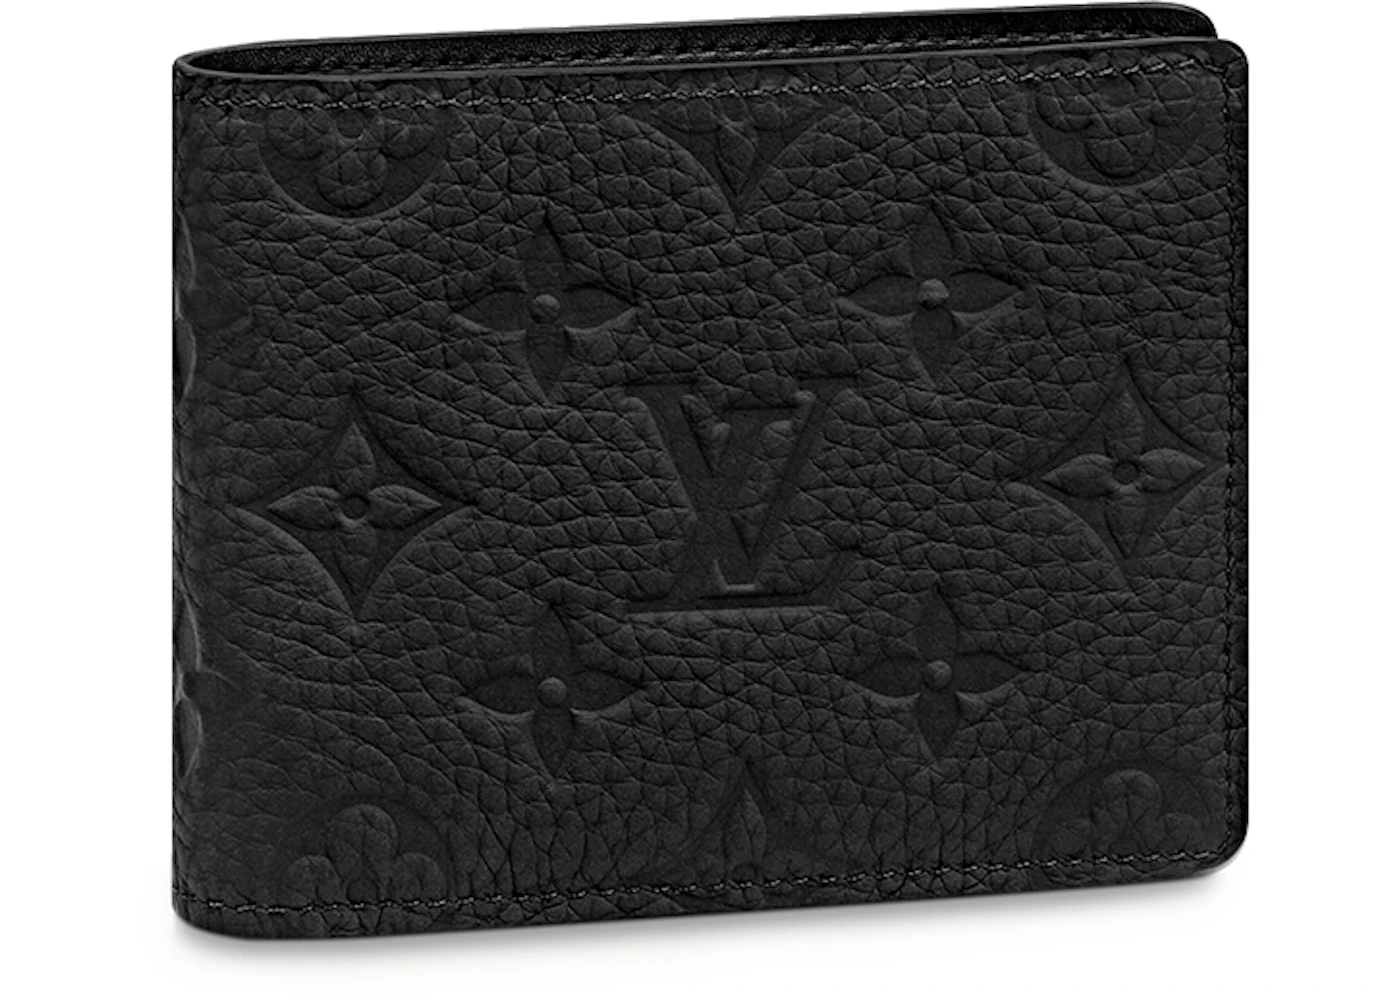 Louis Vuitton Slender (8 slot) Wallet Black in Cowhide Leather - GB